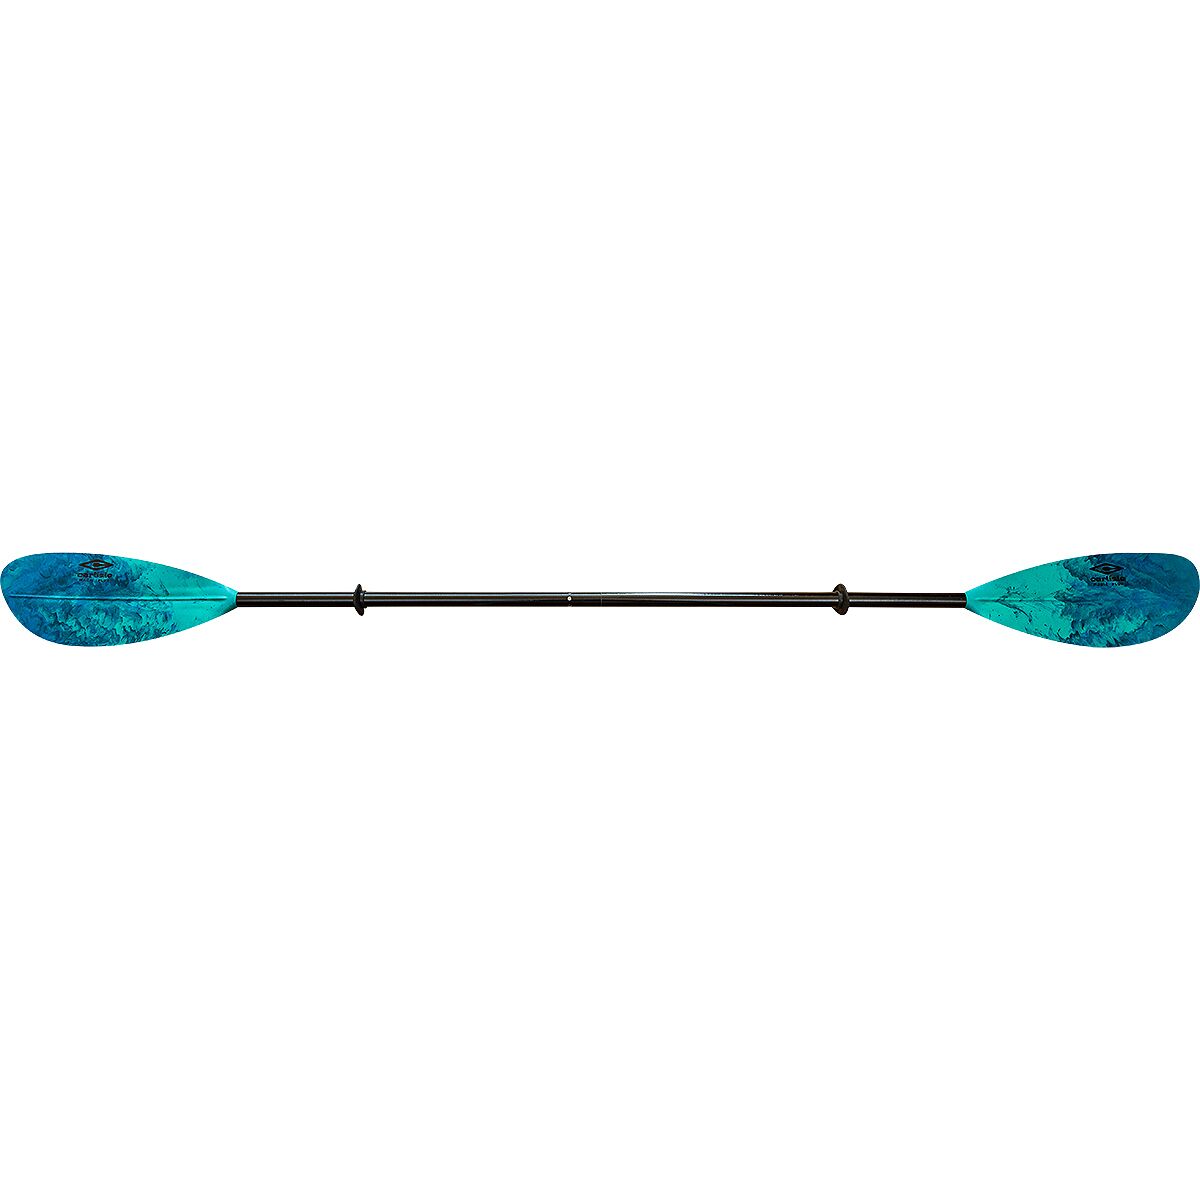 Carlisle Paddles Magic Plus Fiberglass Paddle - Straight Shaft